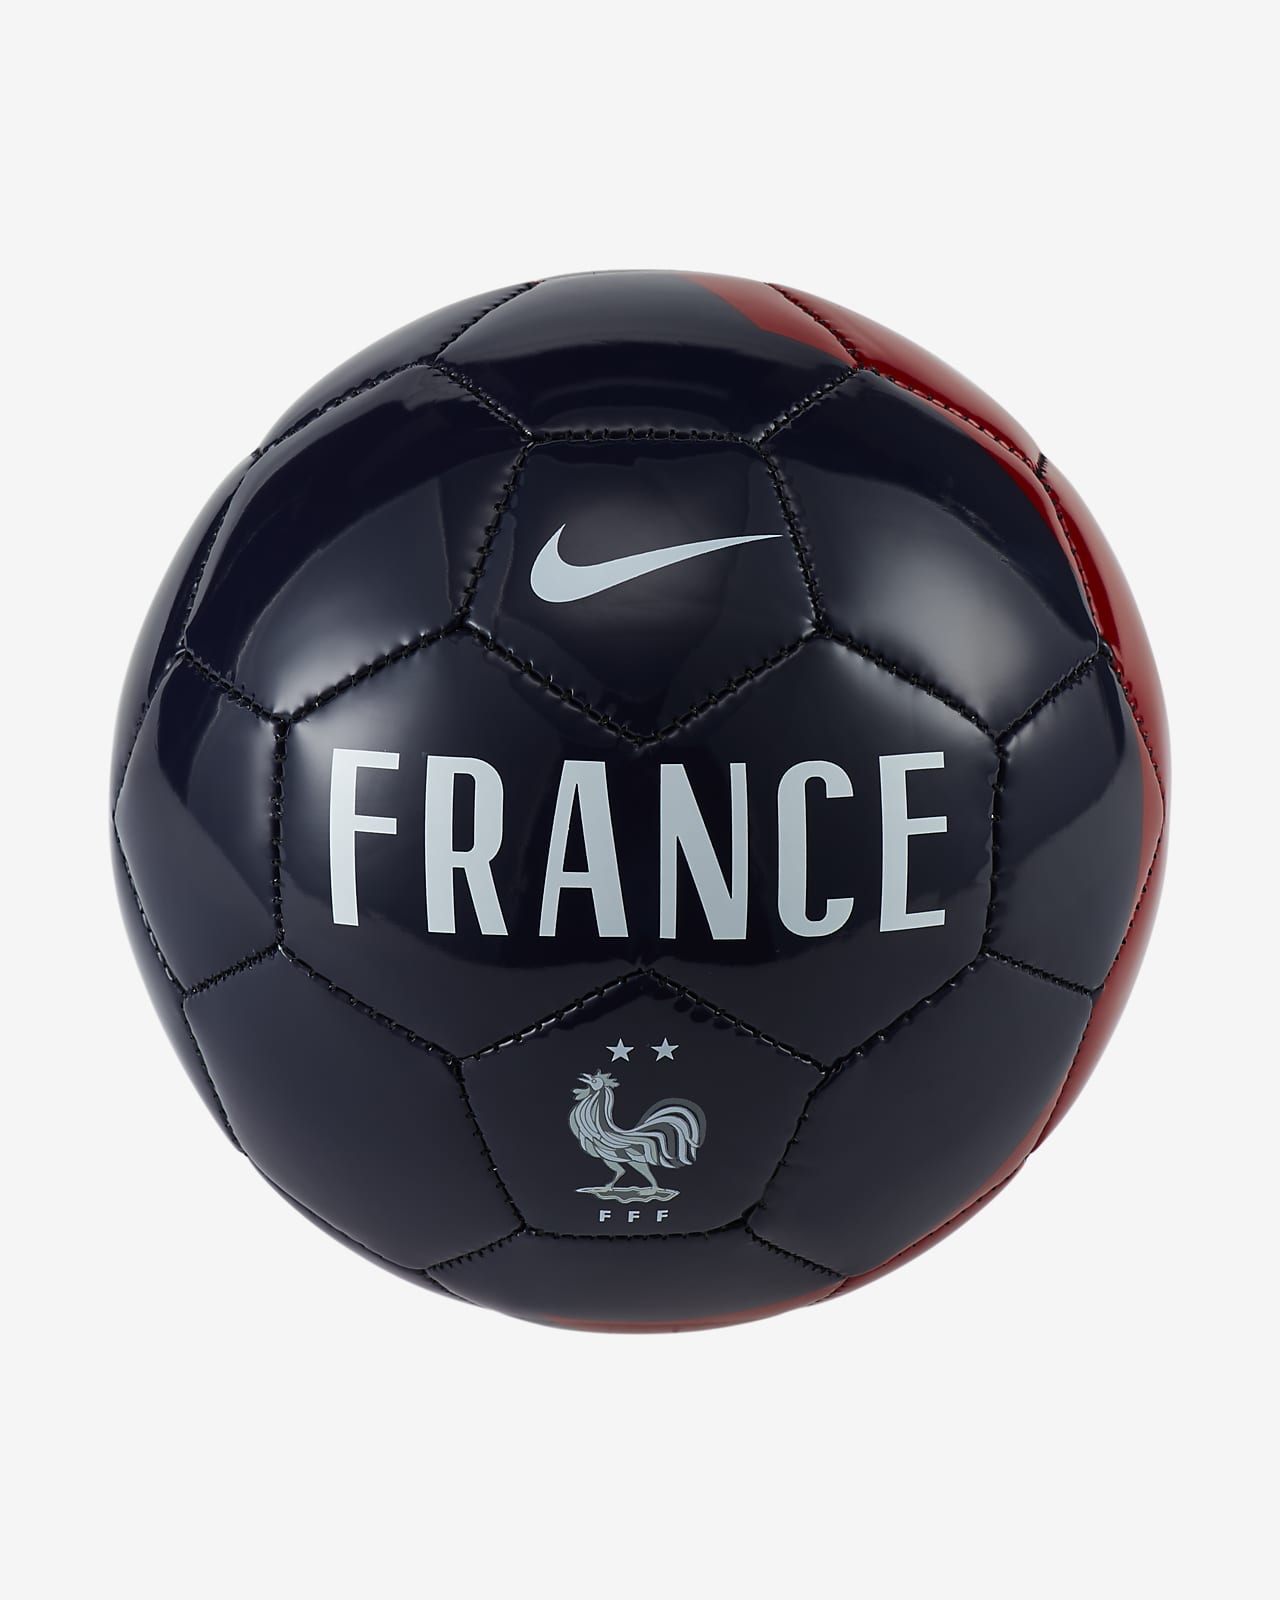 法国队 Skills 足球